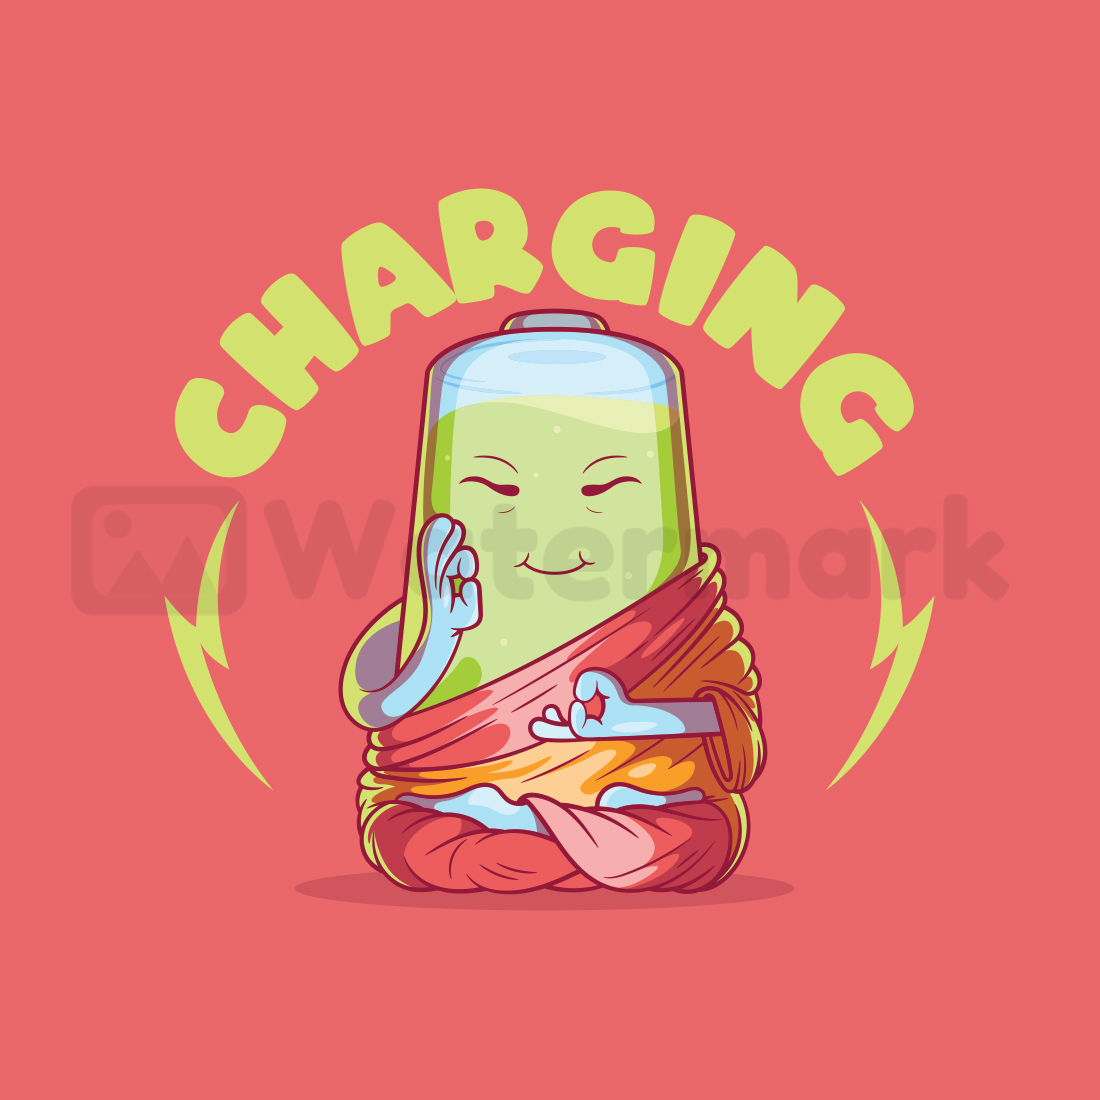 Charging Meditation! cover image.